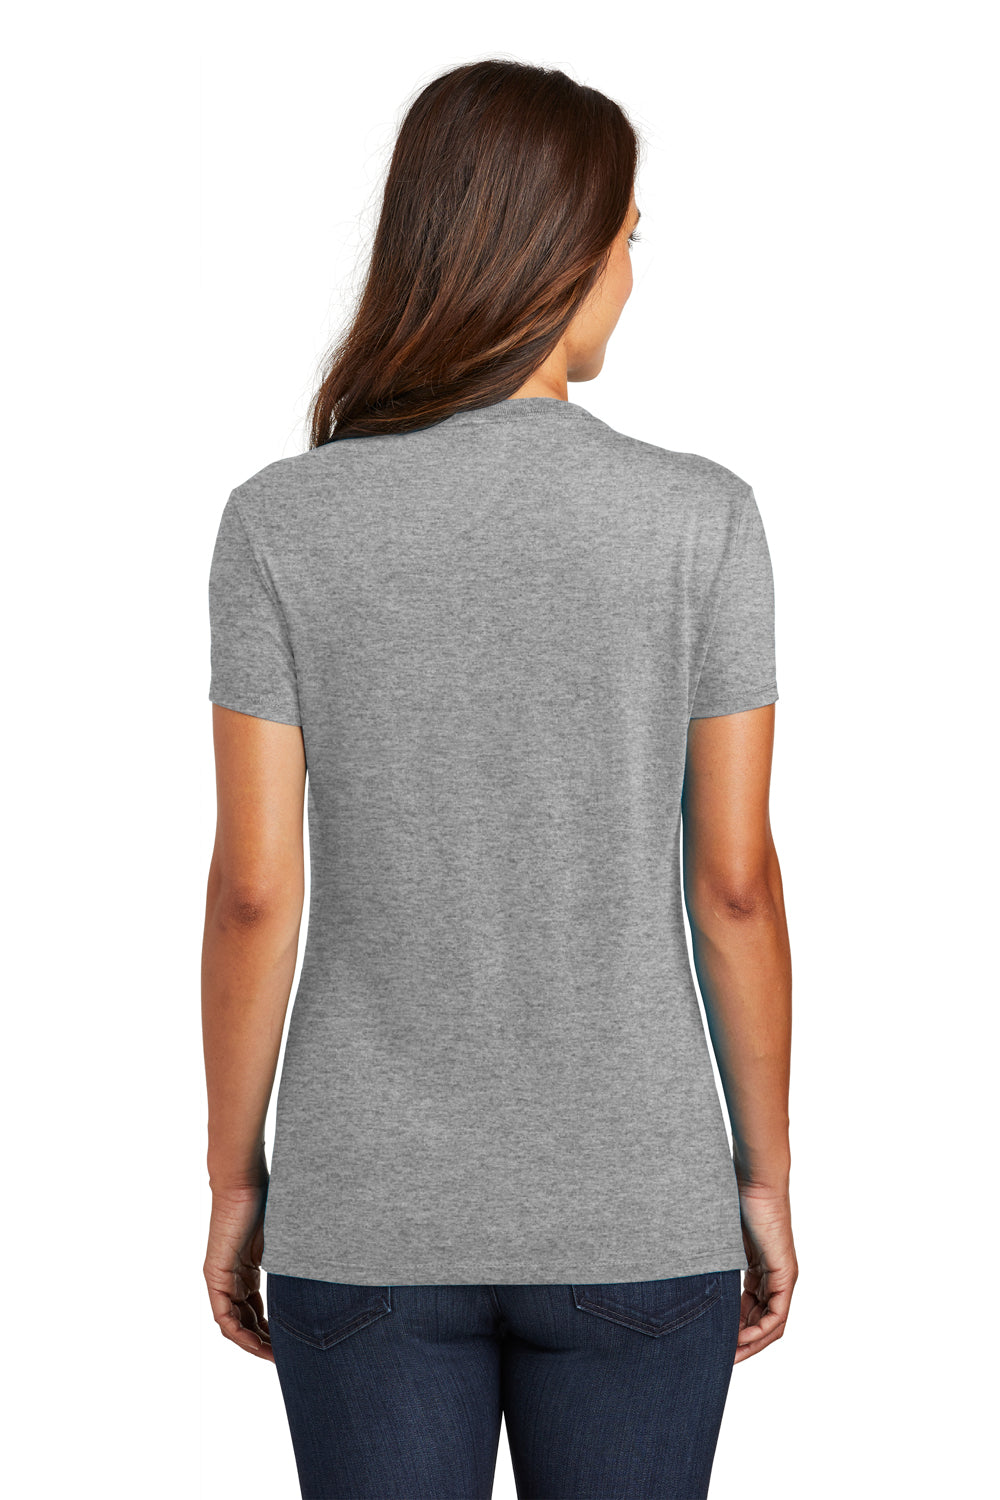 District DM130L Womens Perfect Tri Short Sleeve Crewneck T-Shirt Grey Frost Back